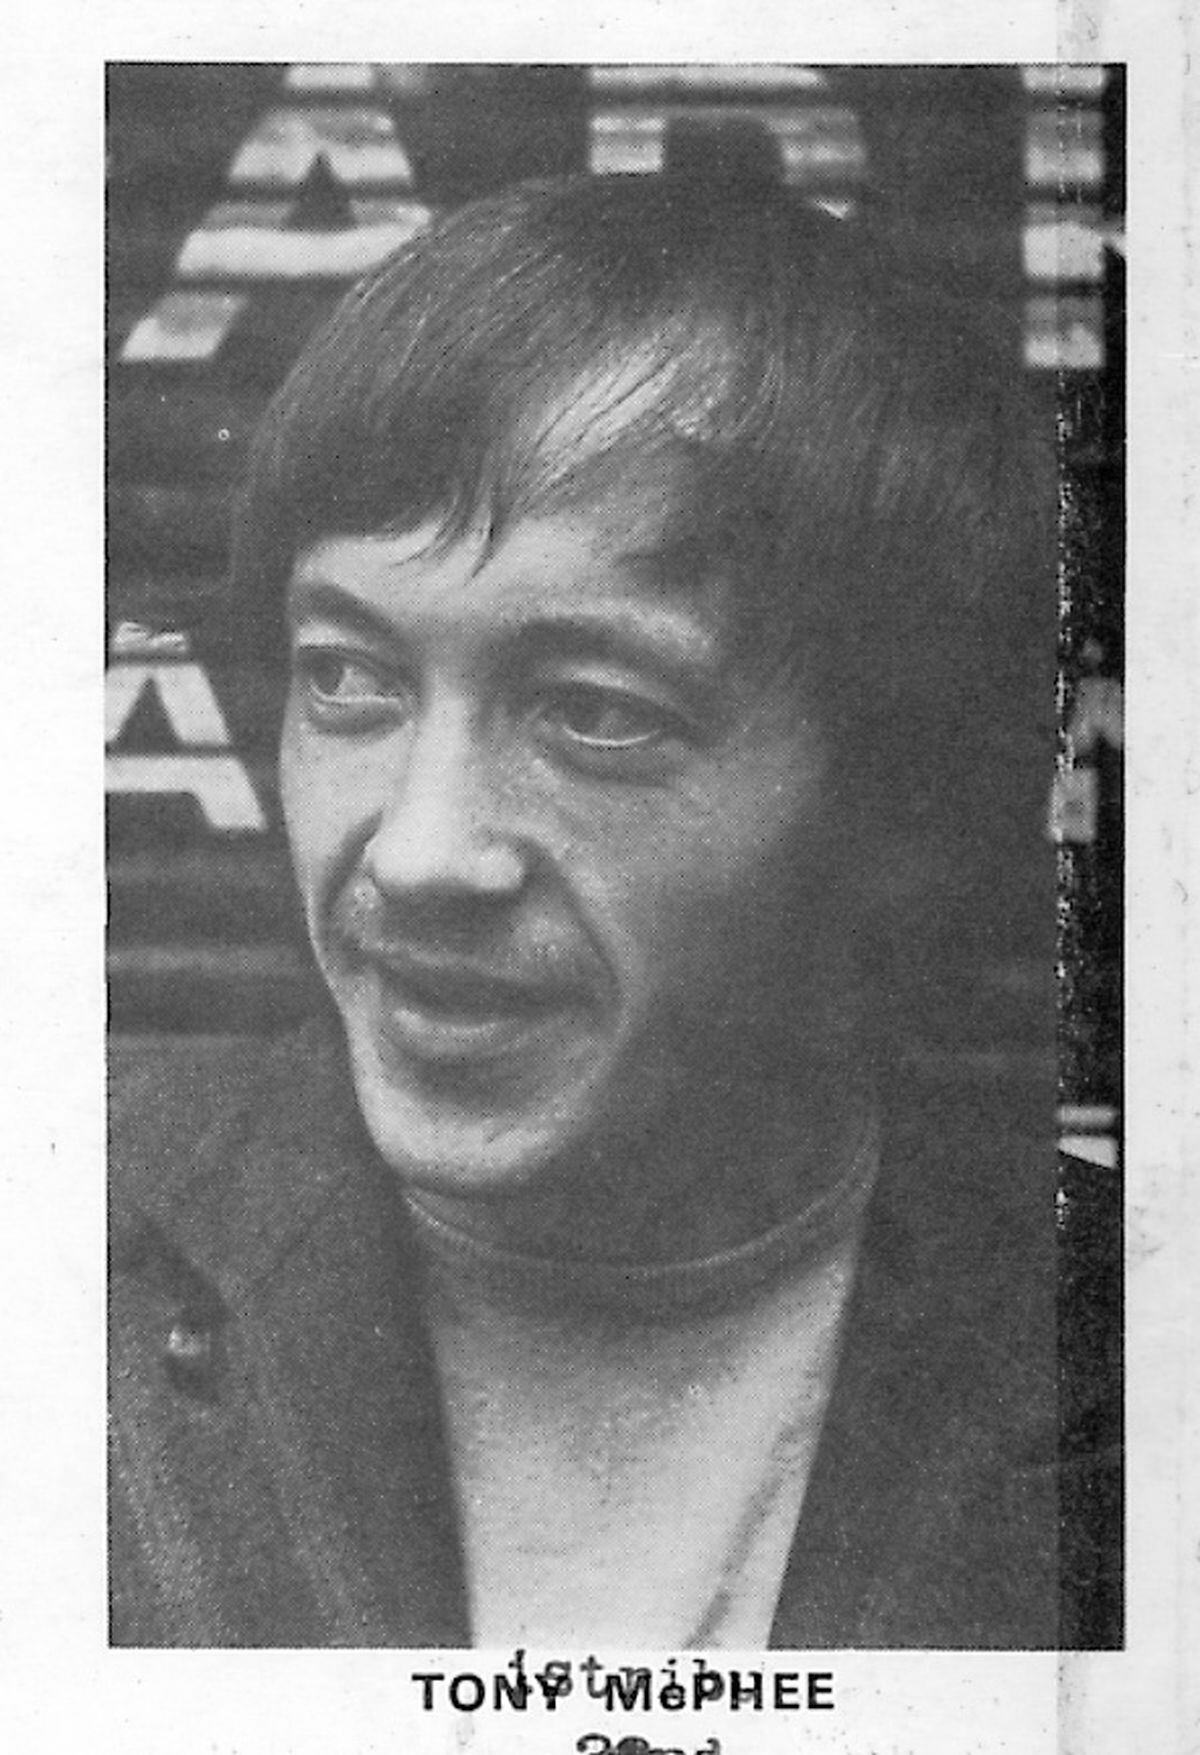 Tony Mcphee in 1968